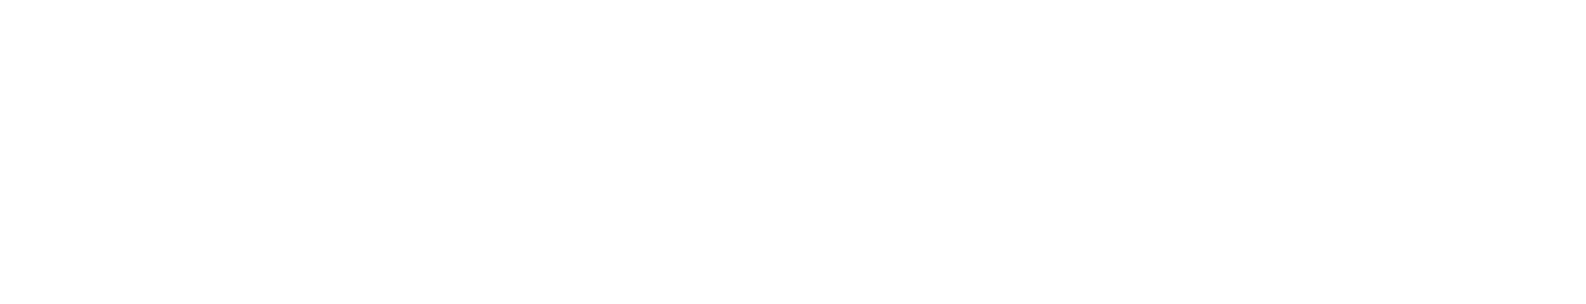 U.S. Cellular
 Logo groß für dunkle Hintergründe (transparentes PNG)